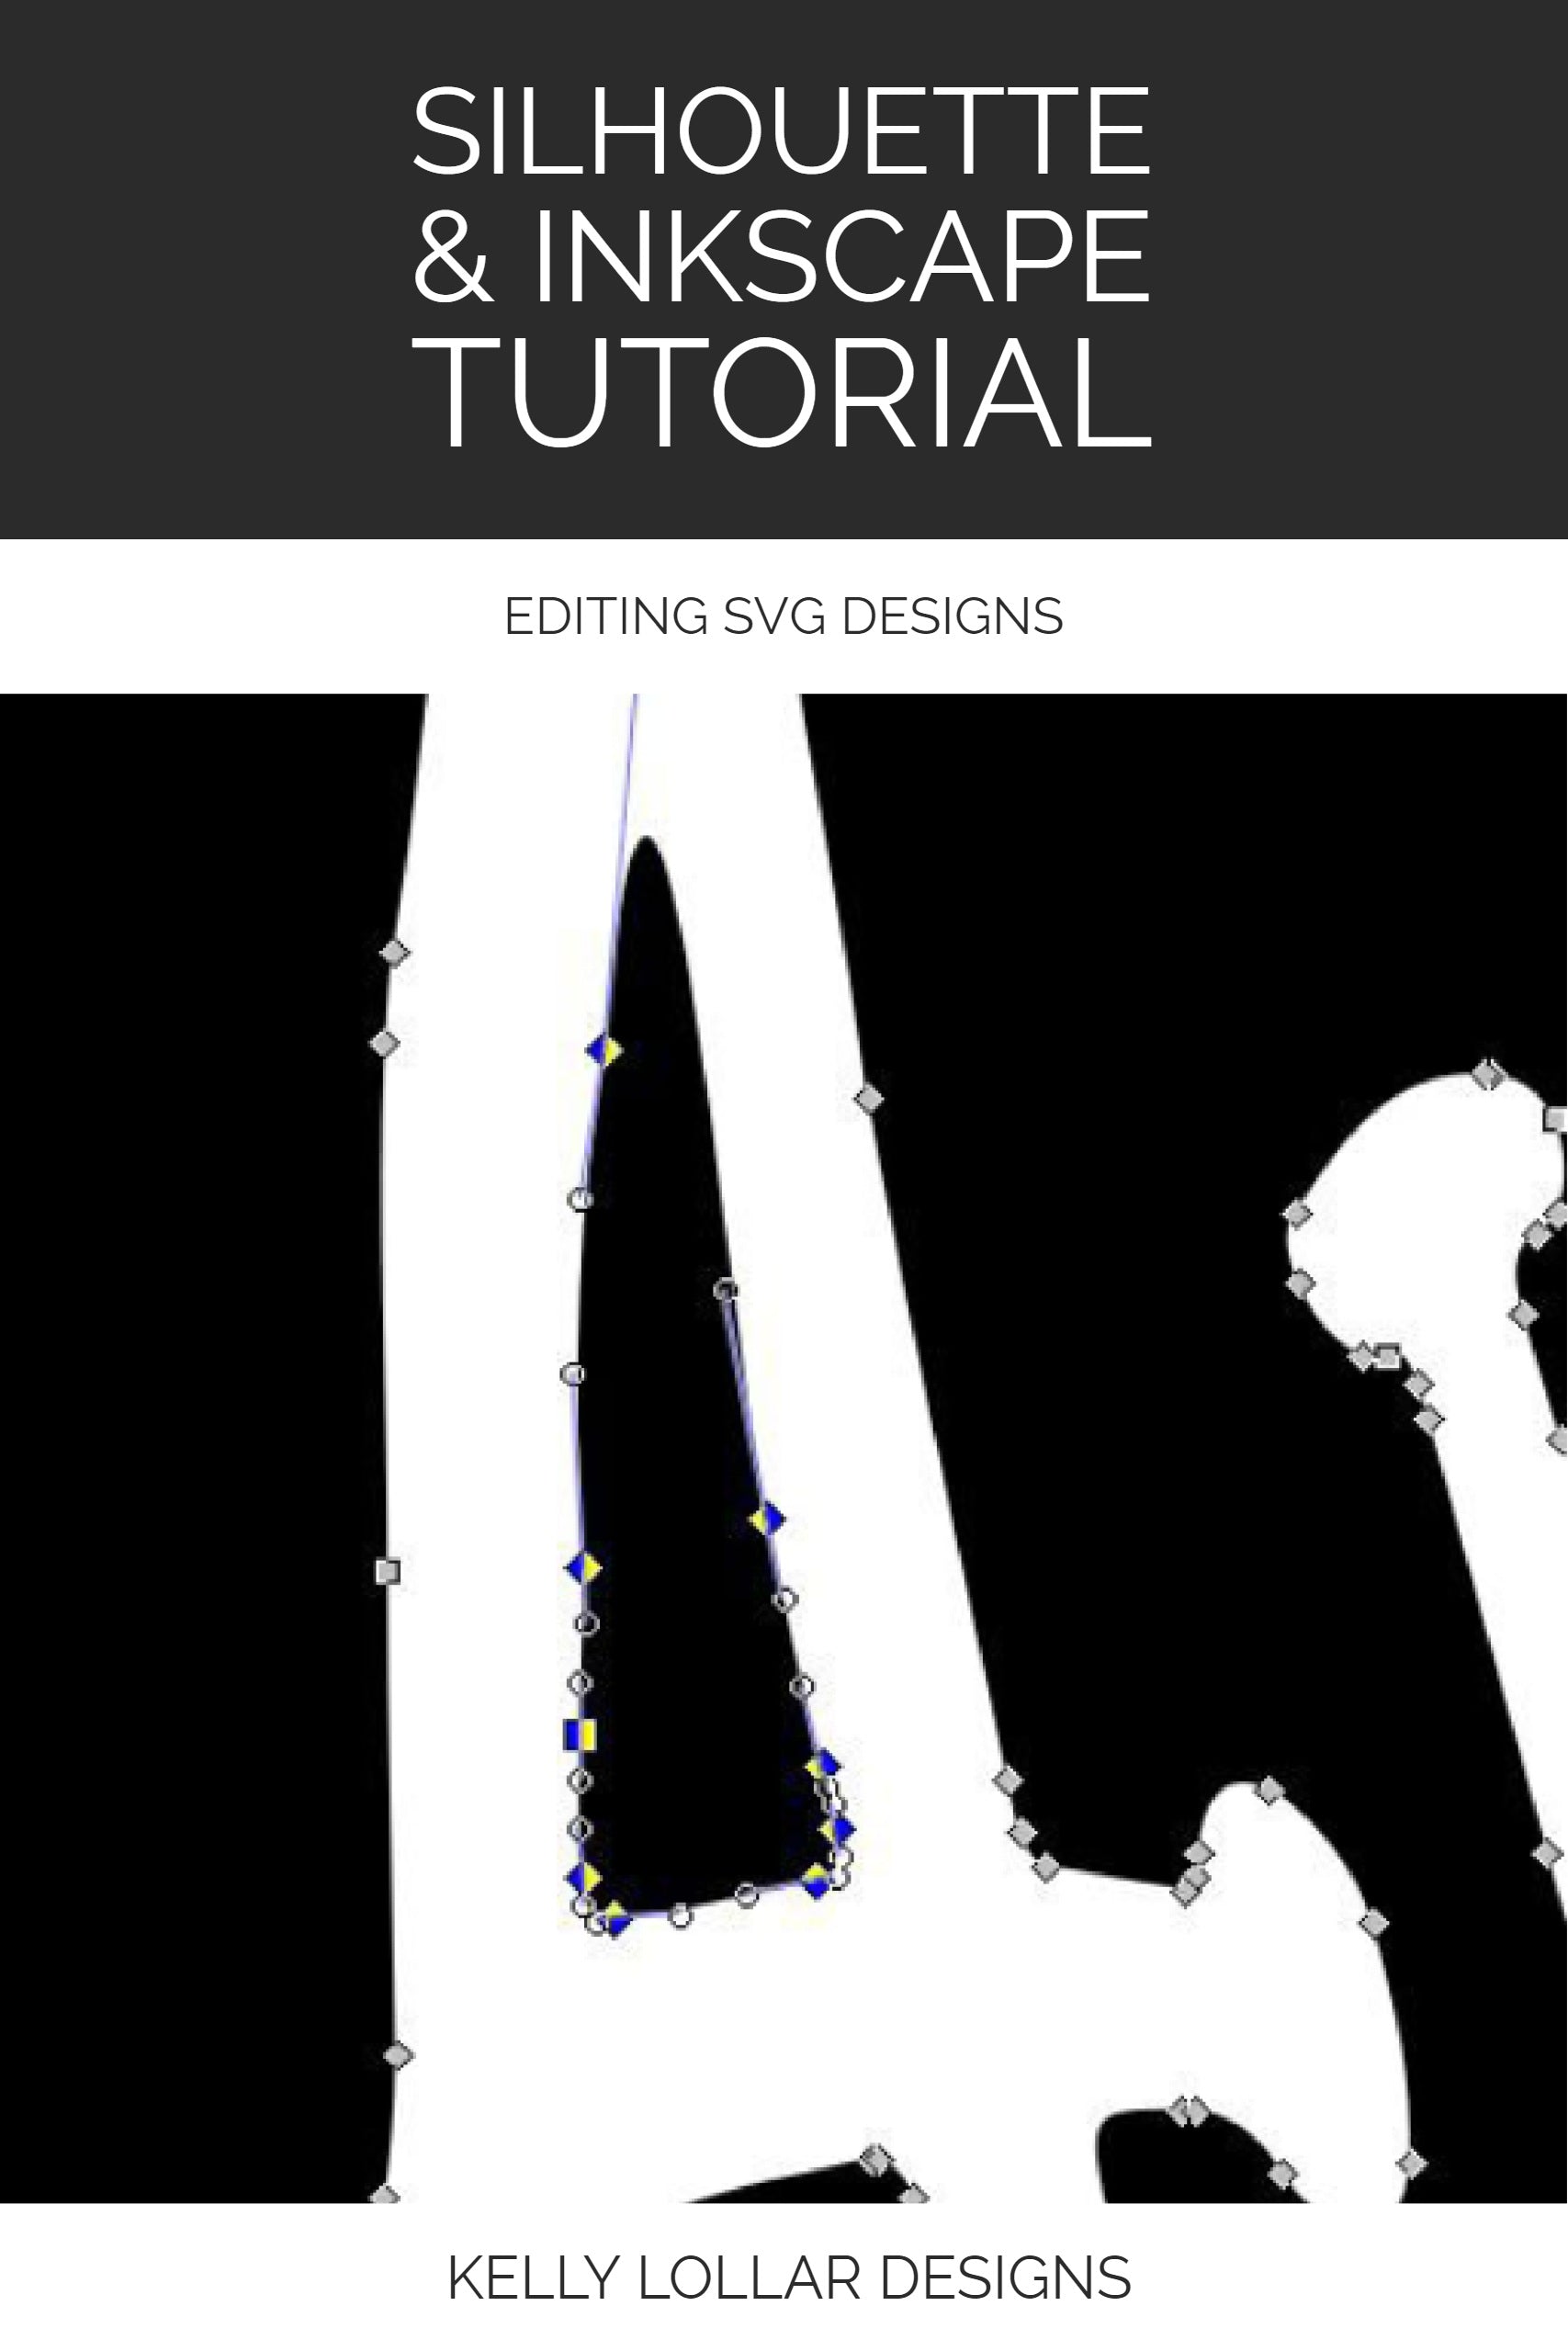 Inkscape & Silhouette Studio Tutorial - Editing SVG Files | Kelly Lollar Designs